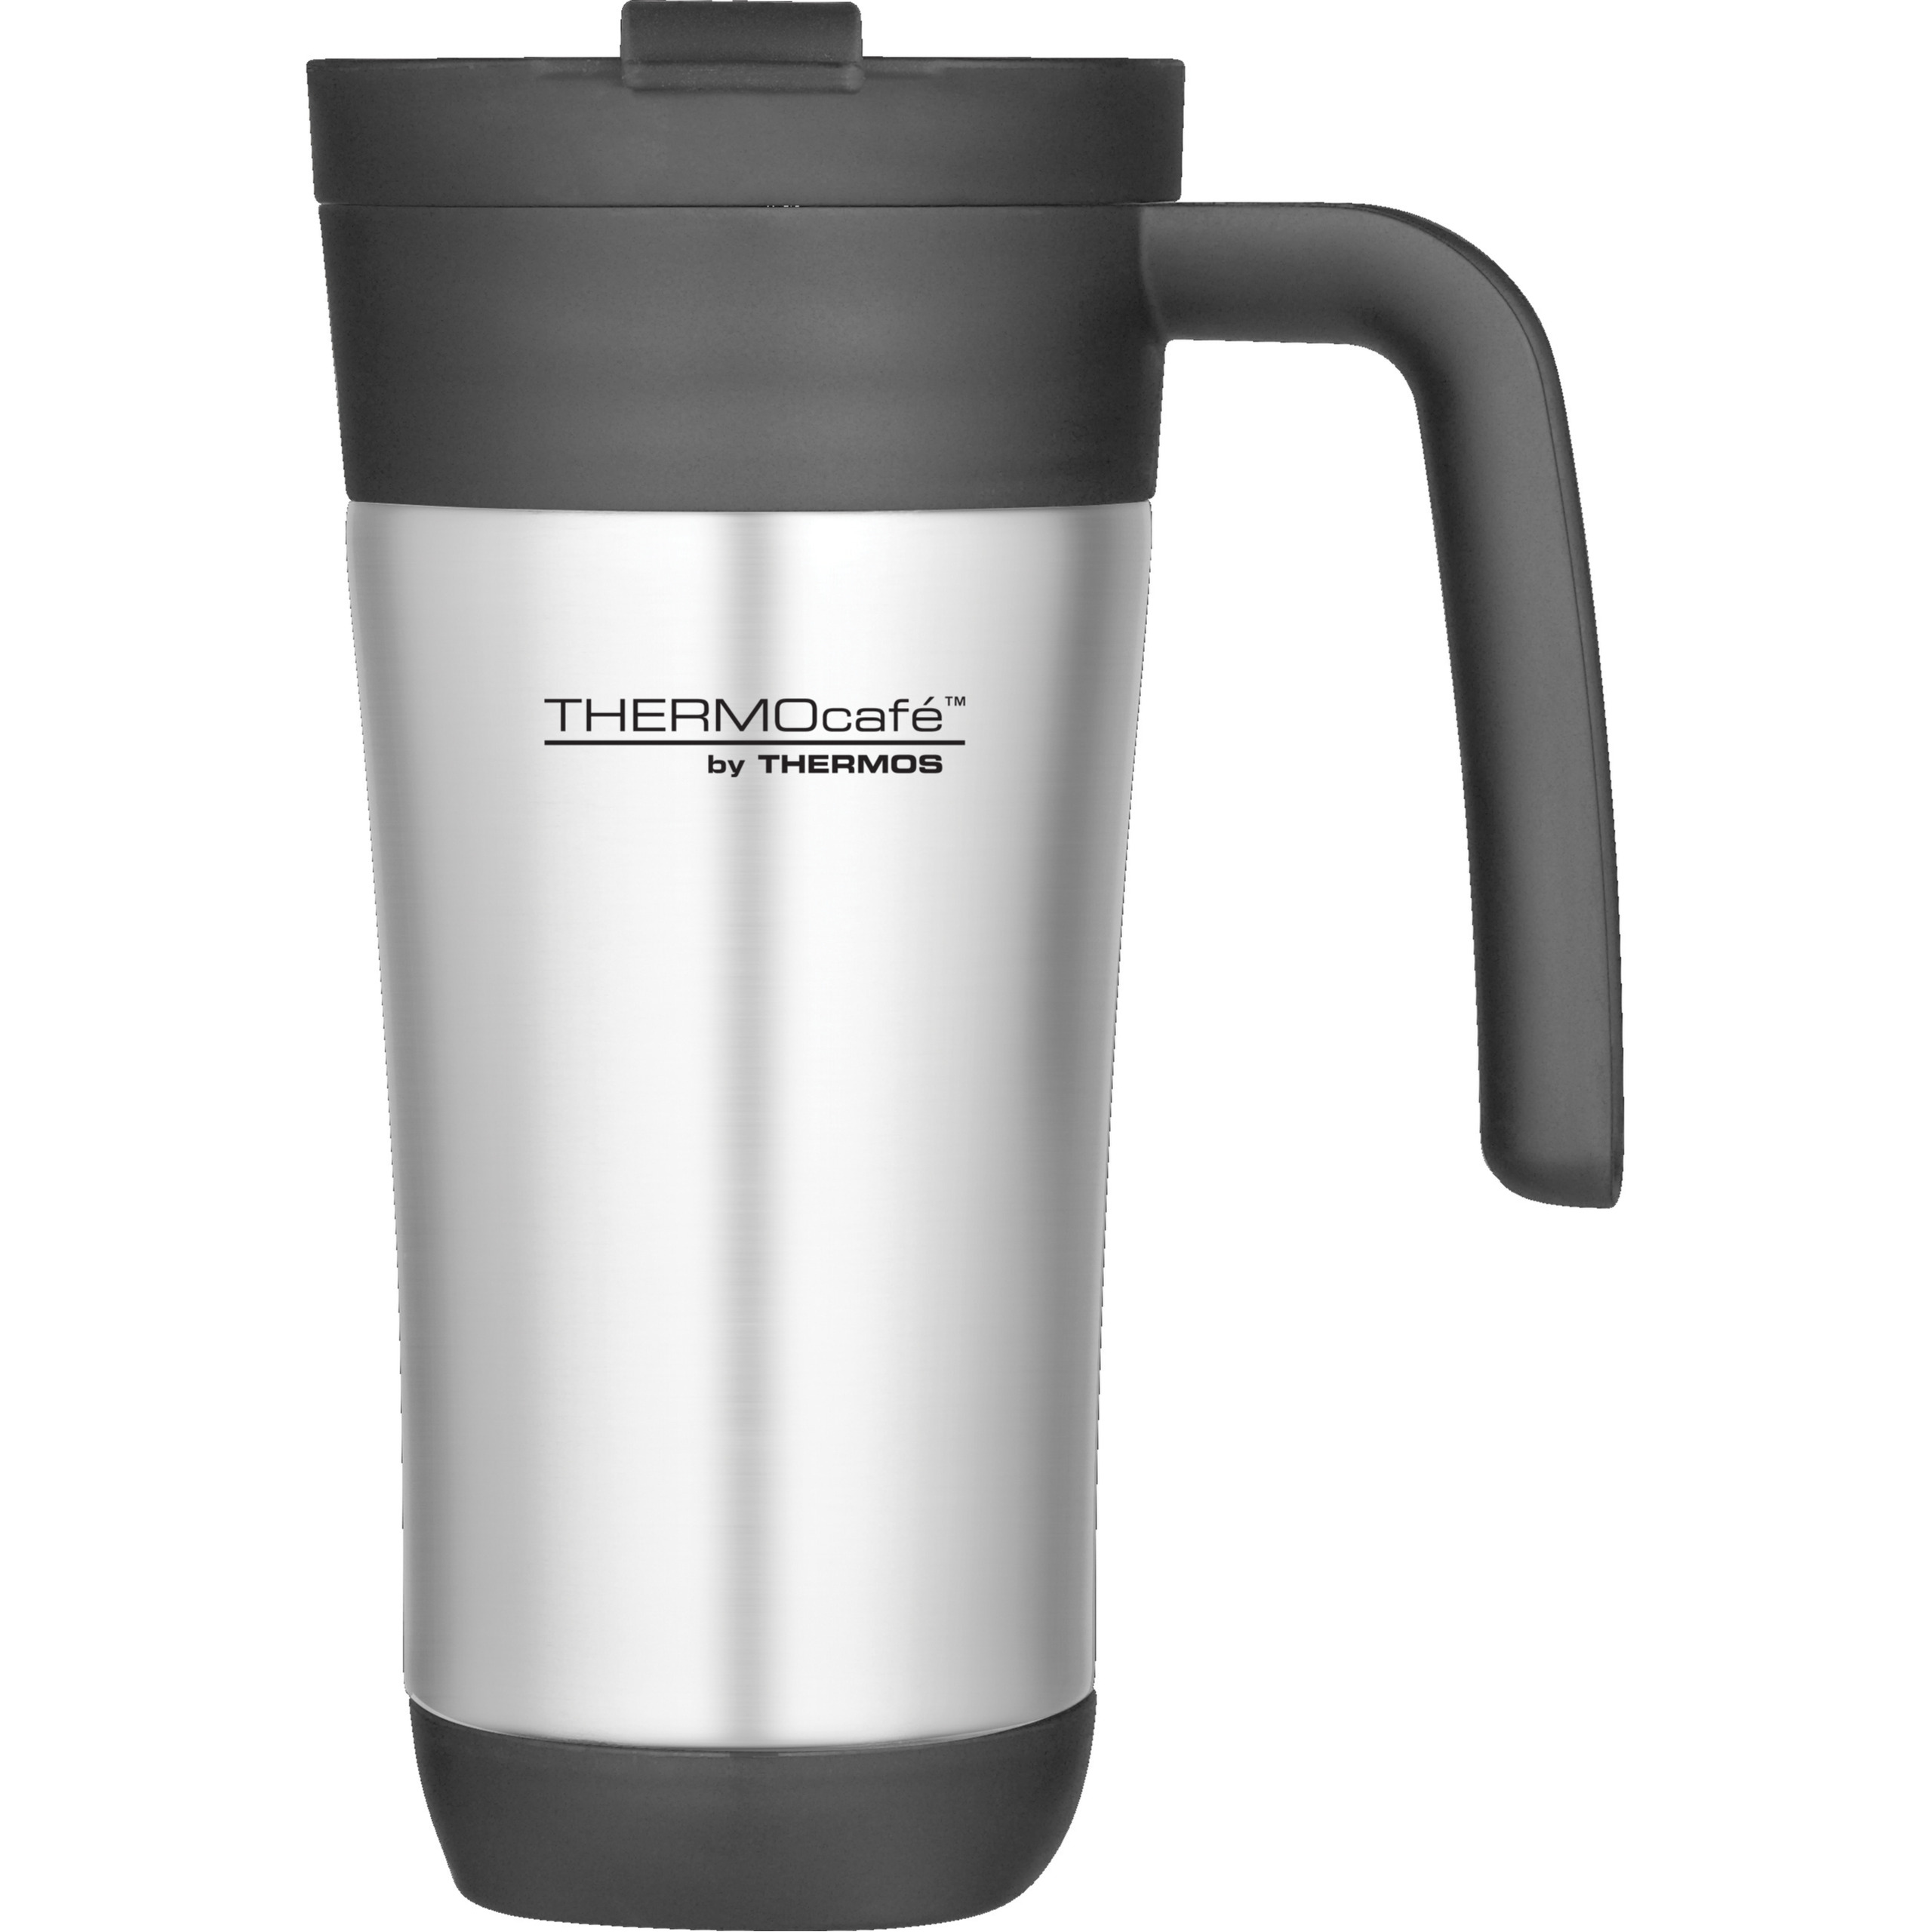 Warmhoudbeker-thermos isoleer koffiebeker-mok RVS zilver-zwart 425 ml